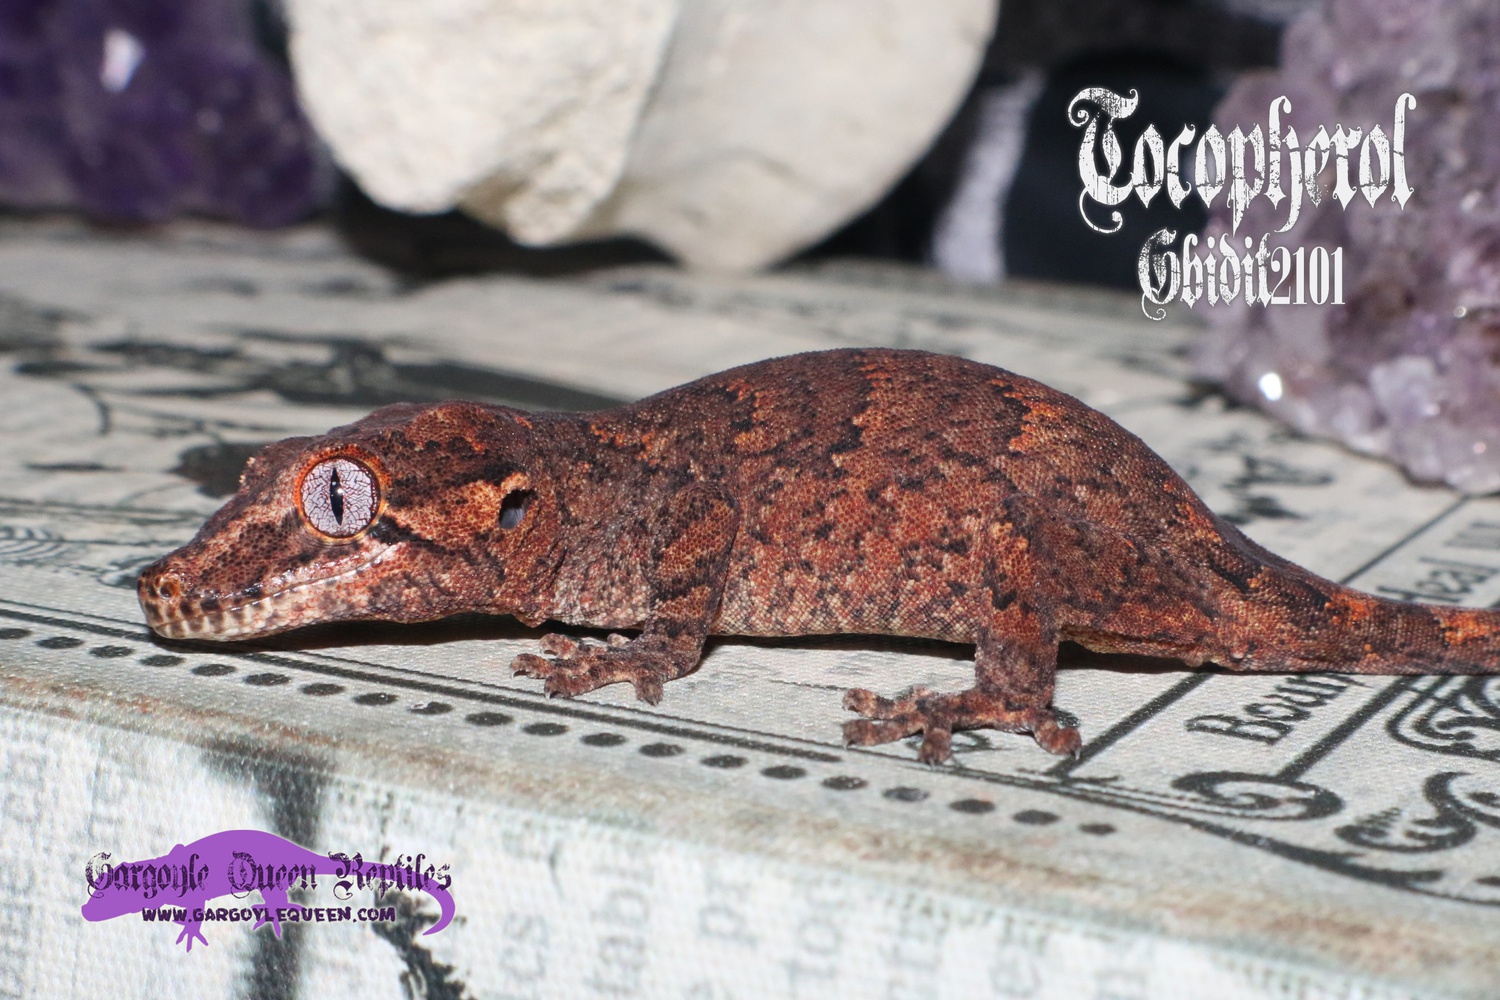 "Tocopherol" Orange Blotched Mottled Reticulated Gargoyle Gecko by Gargoyle Queen Reptiles